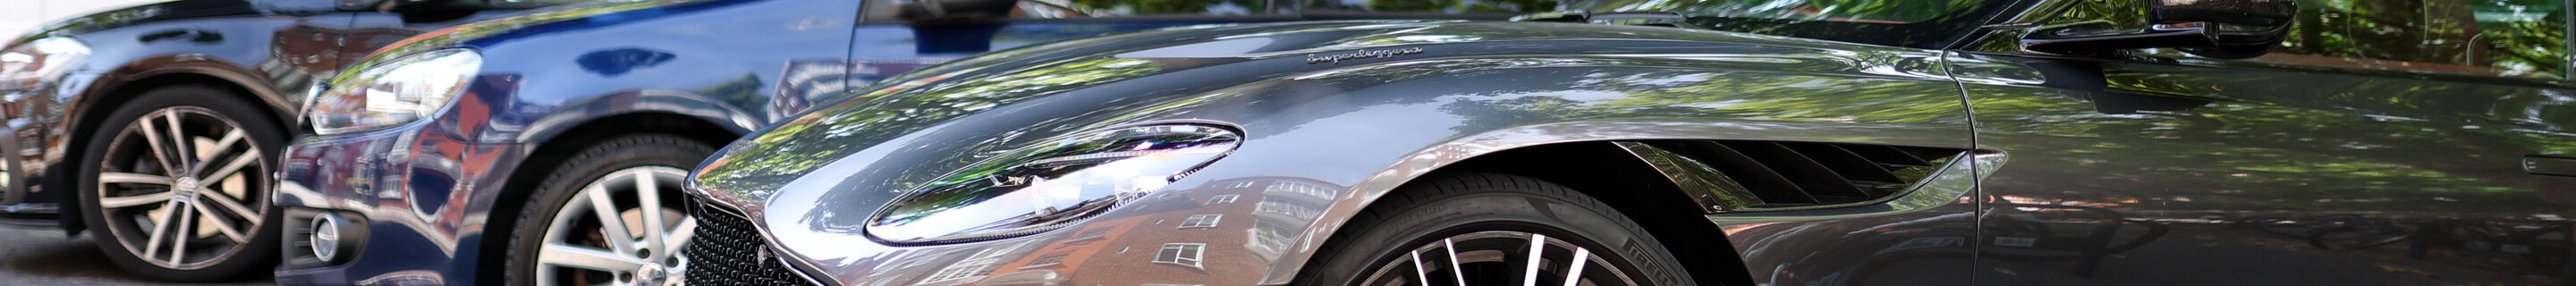 Aston Martin DBS Superleggera Volante